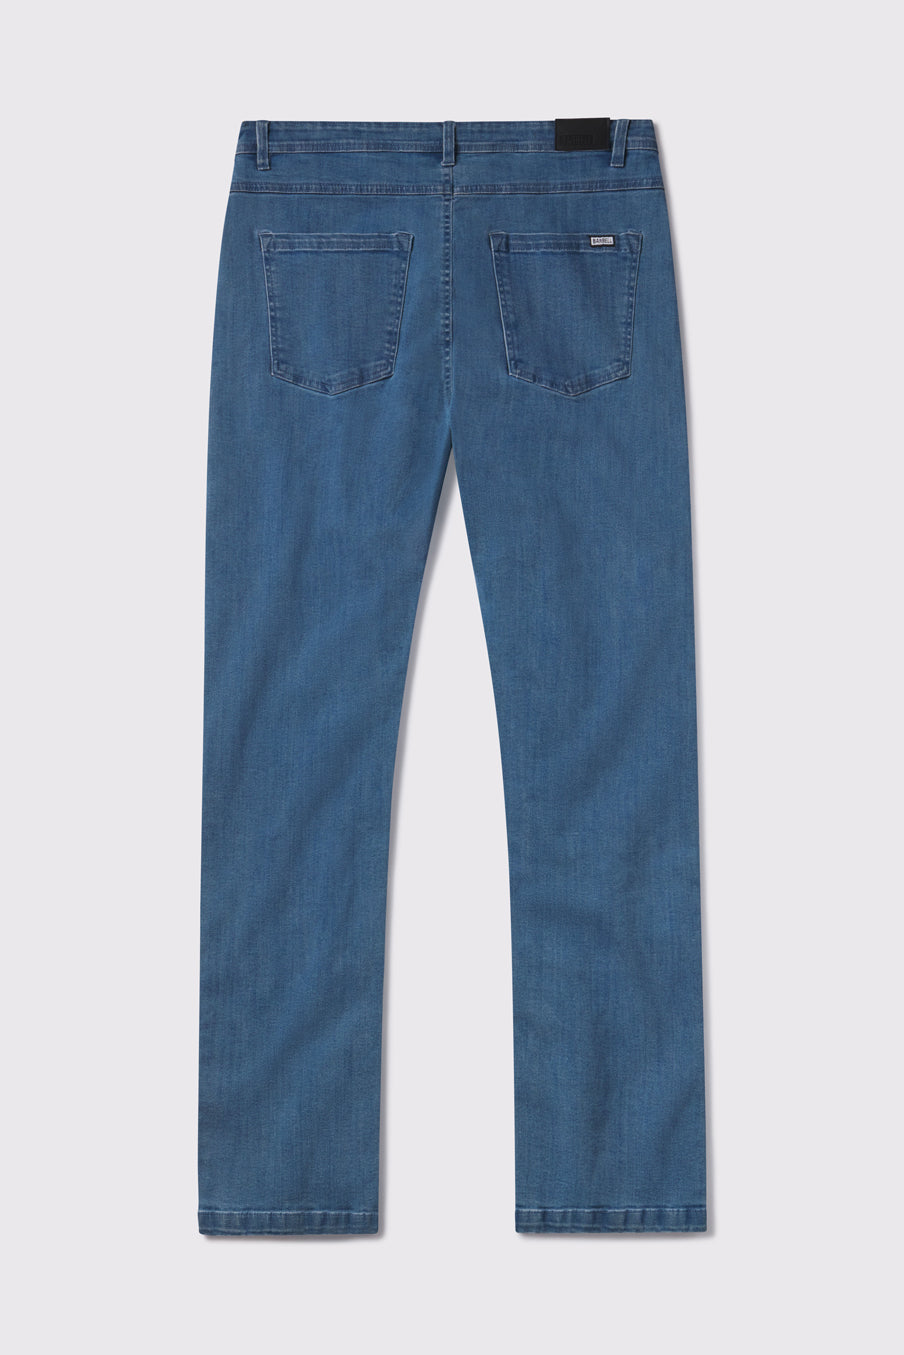 Women's Classic Straight Comfort Denim Jeans - Dark Rinse – Ace